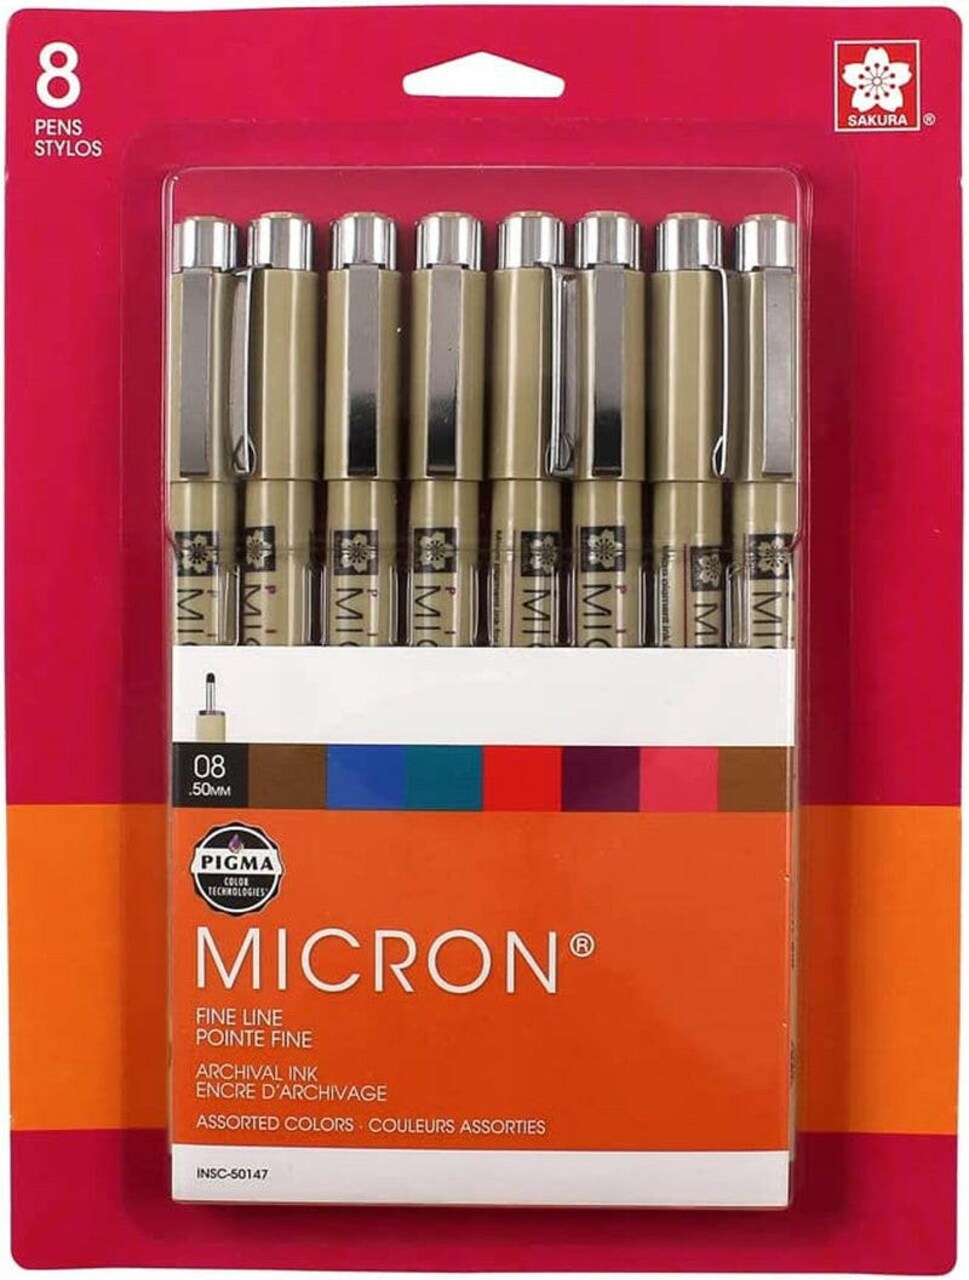 SAKURA Pigma Micron Fineliner Pens - Archival Black and Colored